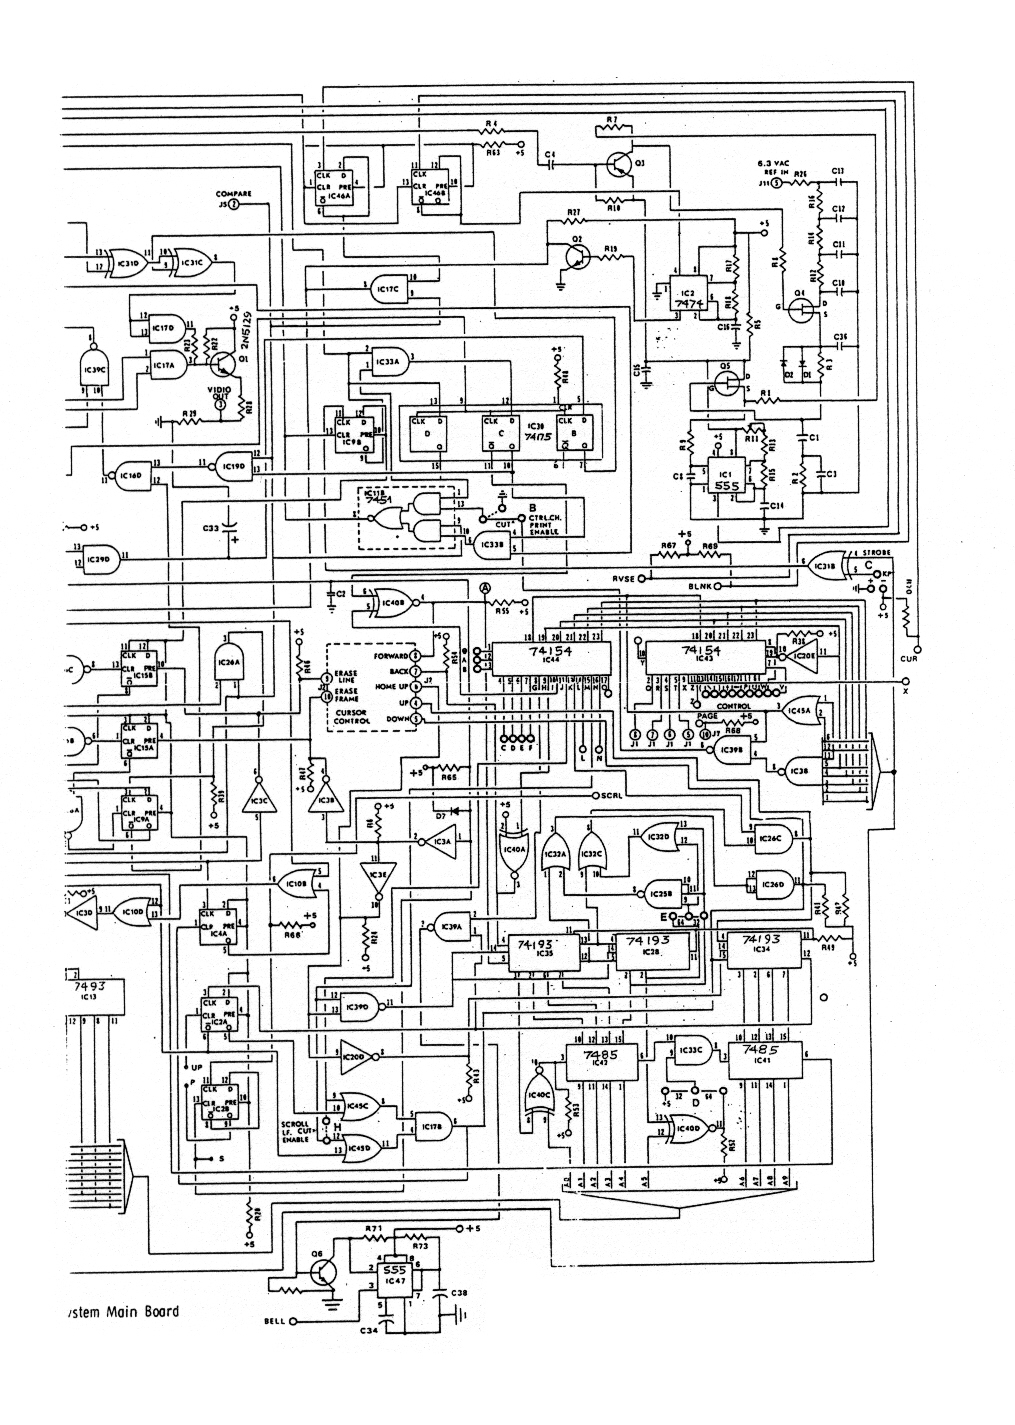 96 International 4700 Wiring Diagram - Wiring Diagram Networks